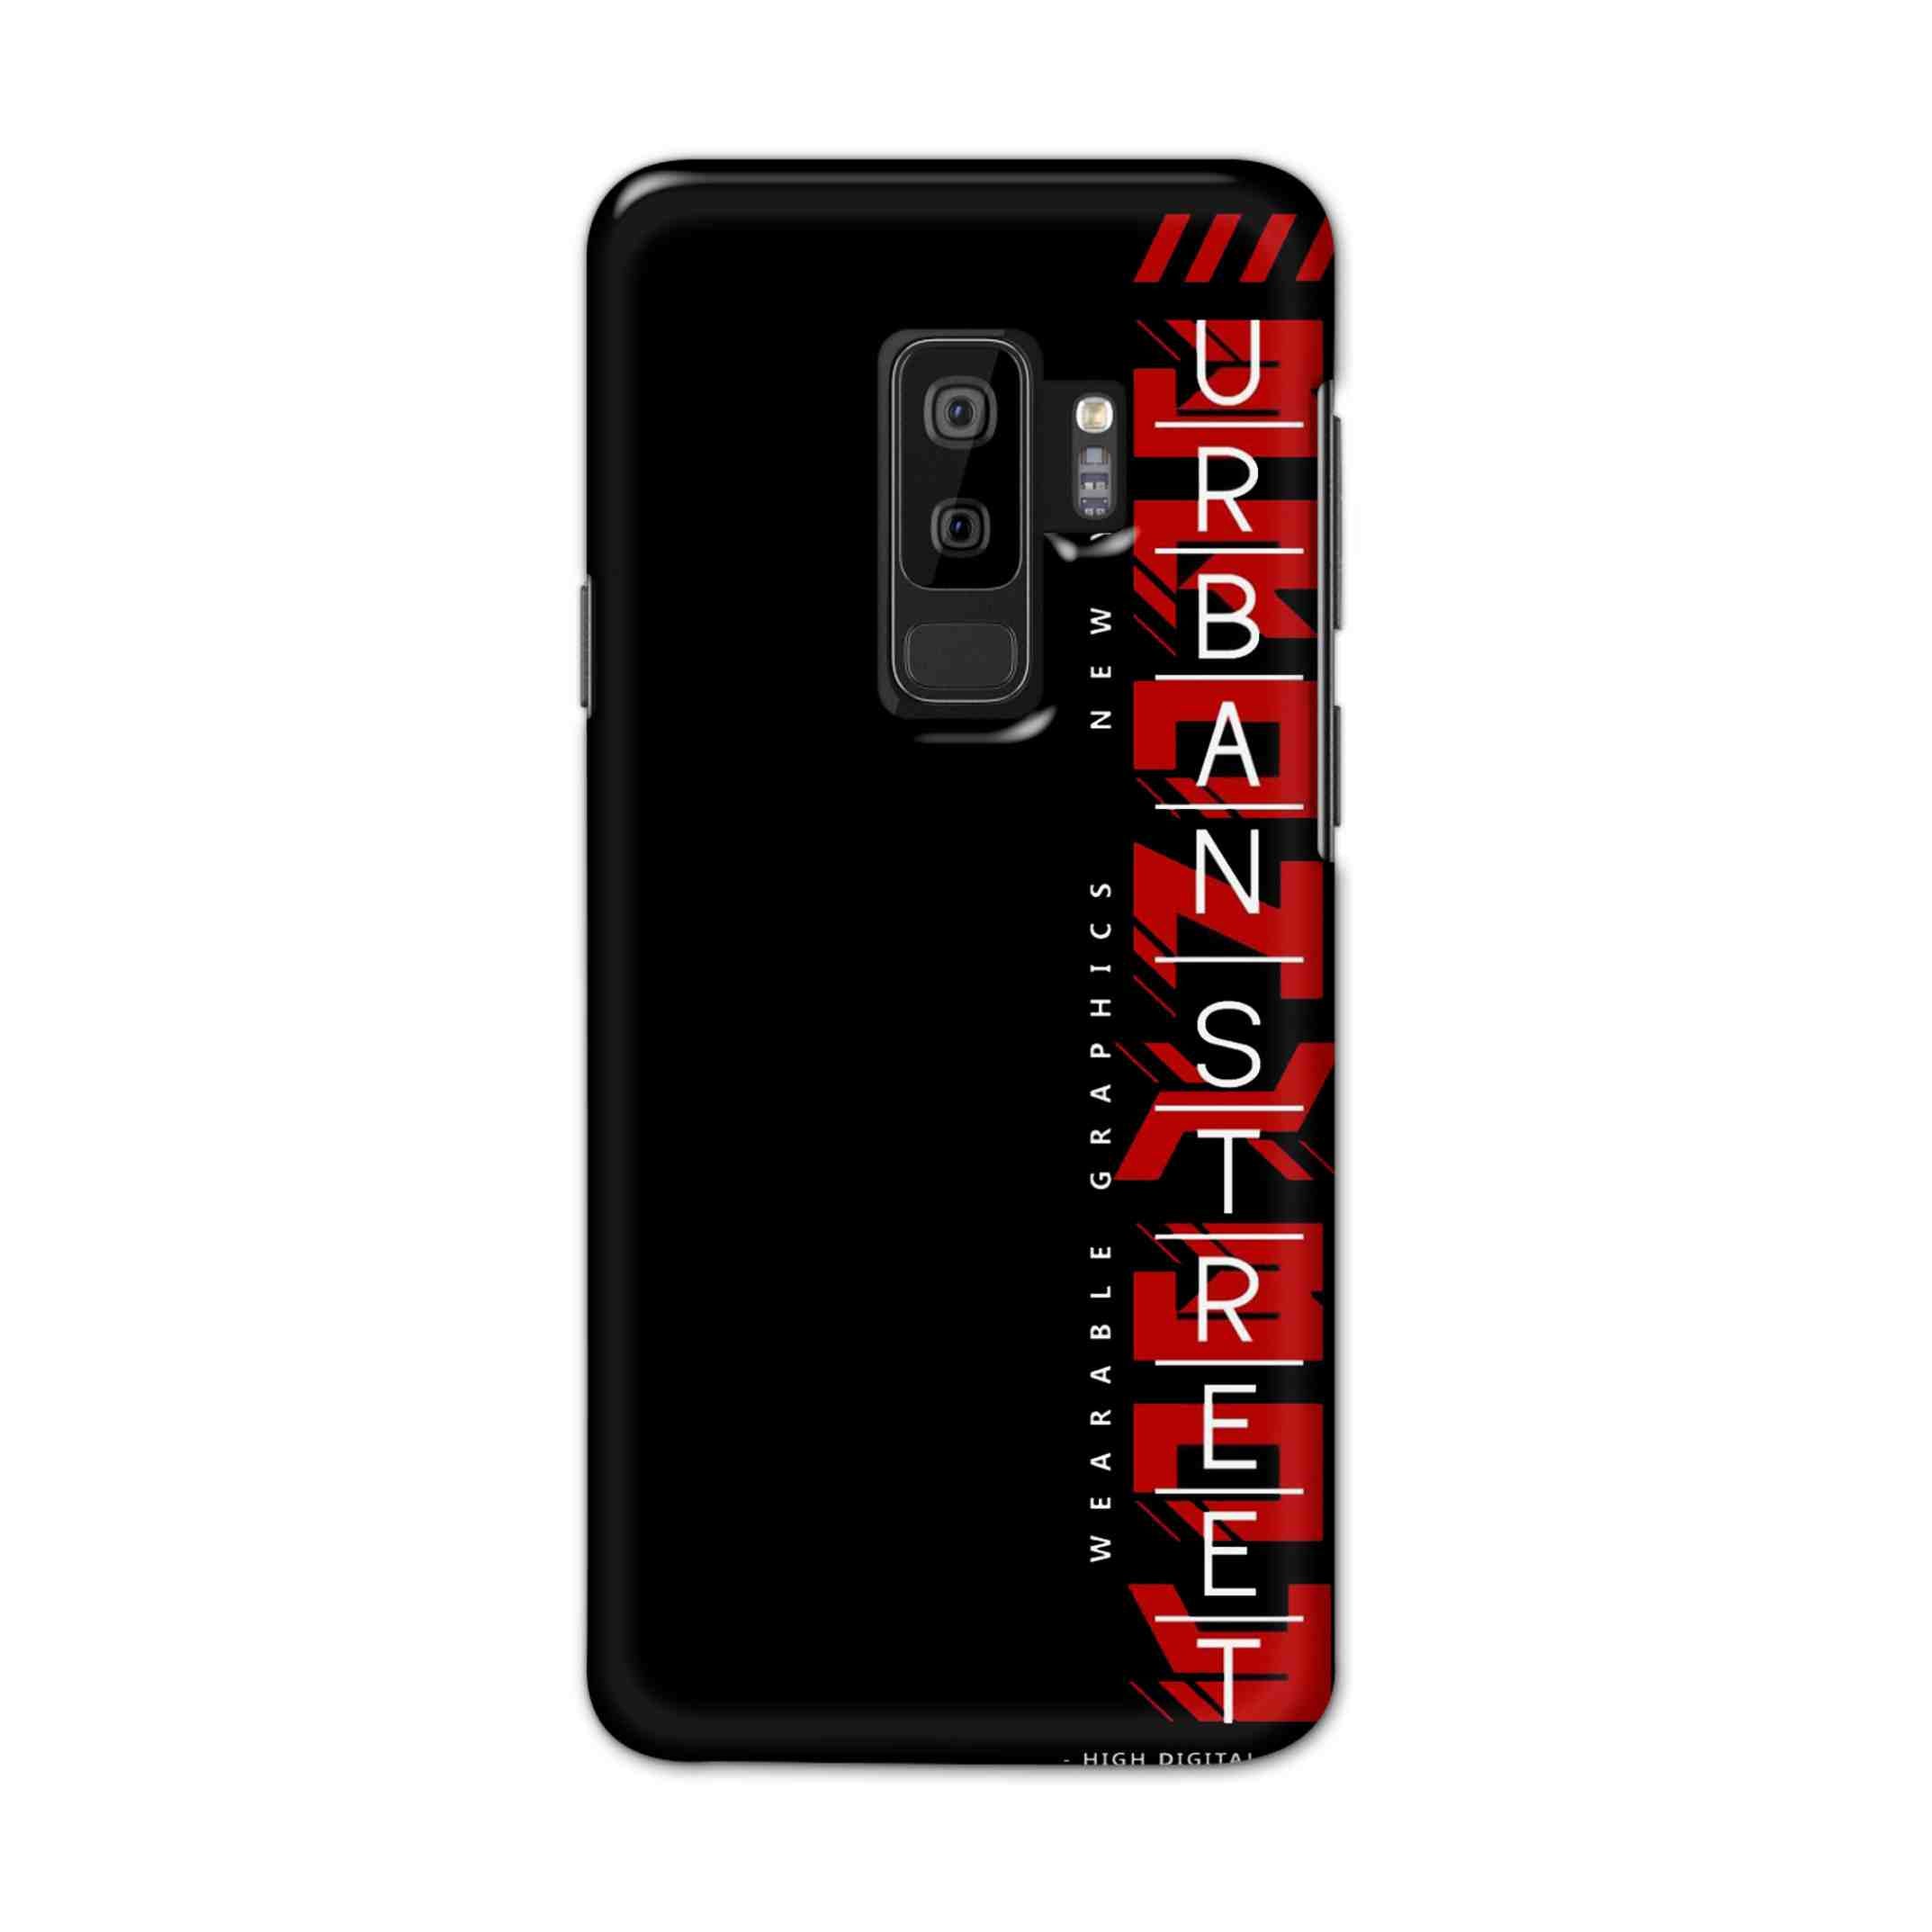 Buy Urban Street Hard Back Mobile Phone Case Cover For Samsung S9 plus Online